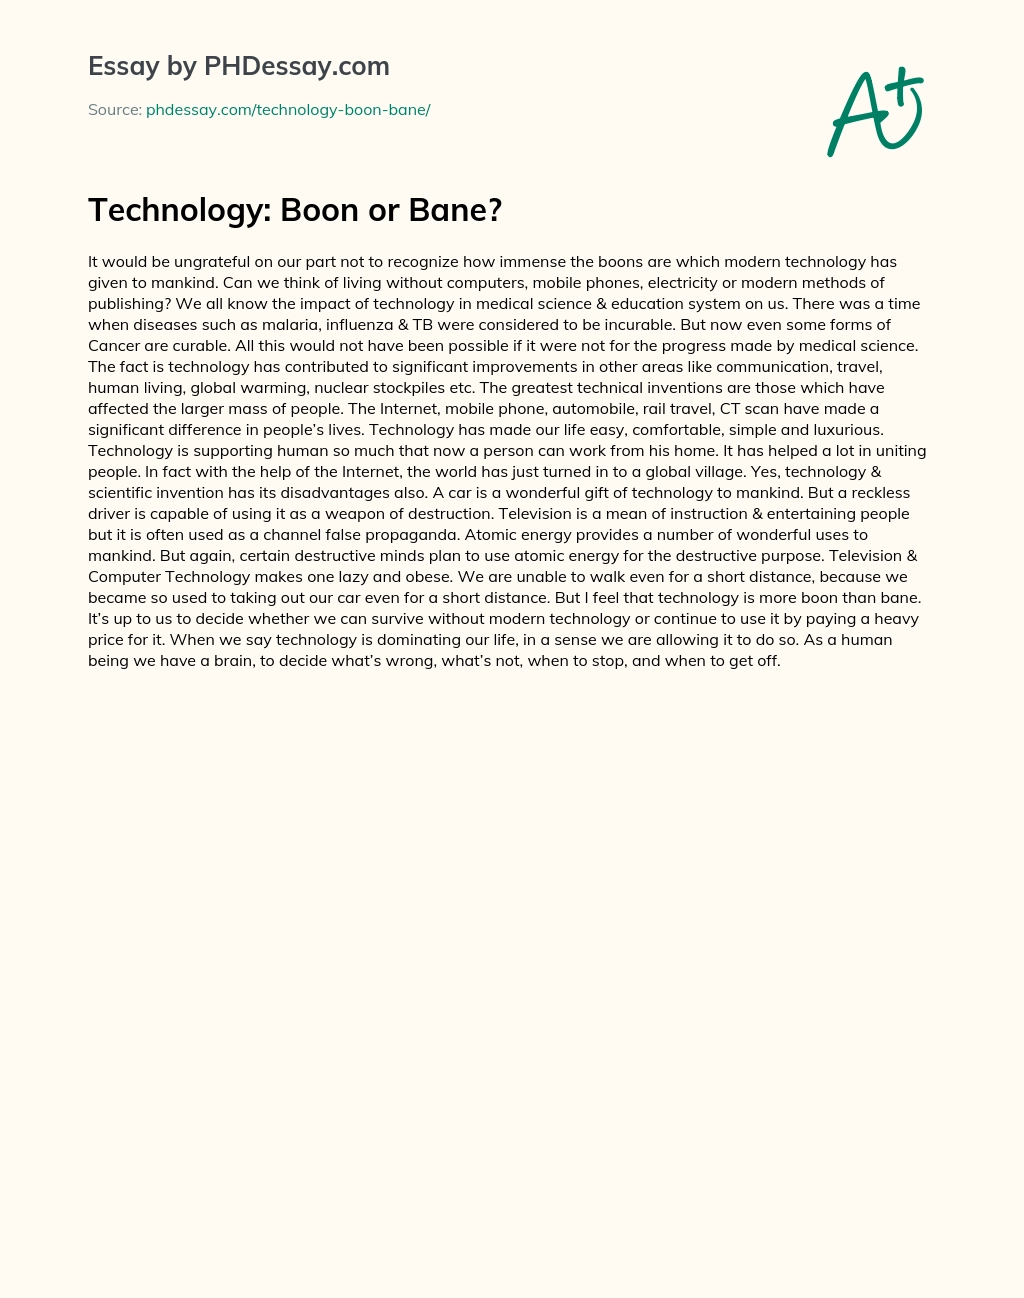 argumentative essay on technology boon or bane